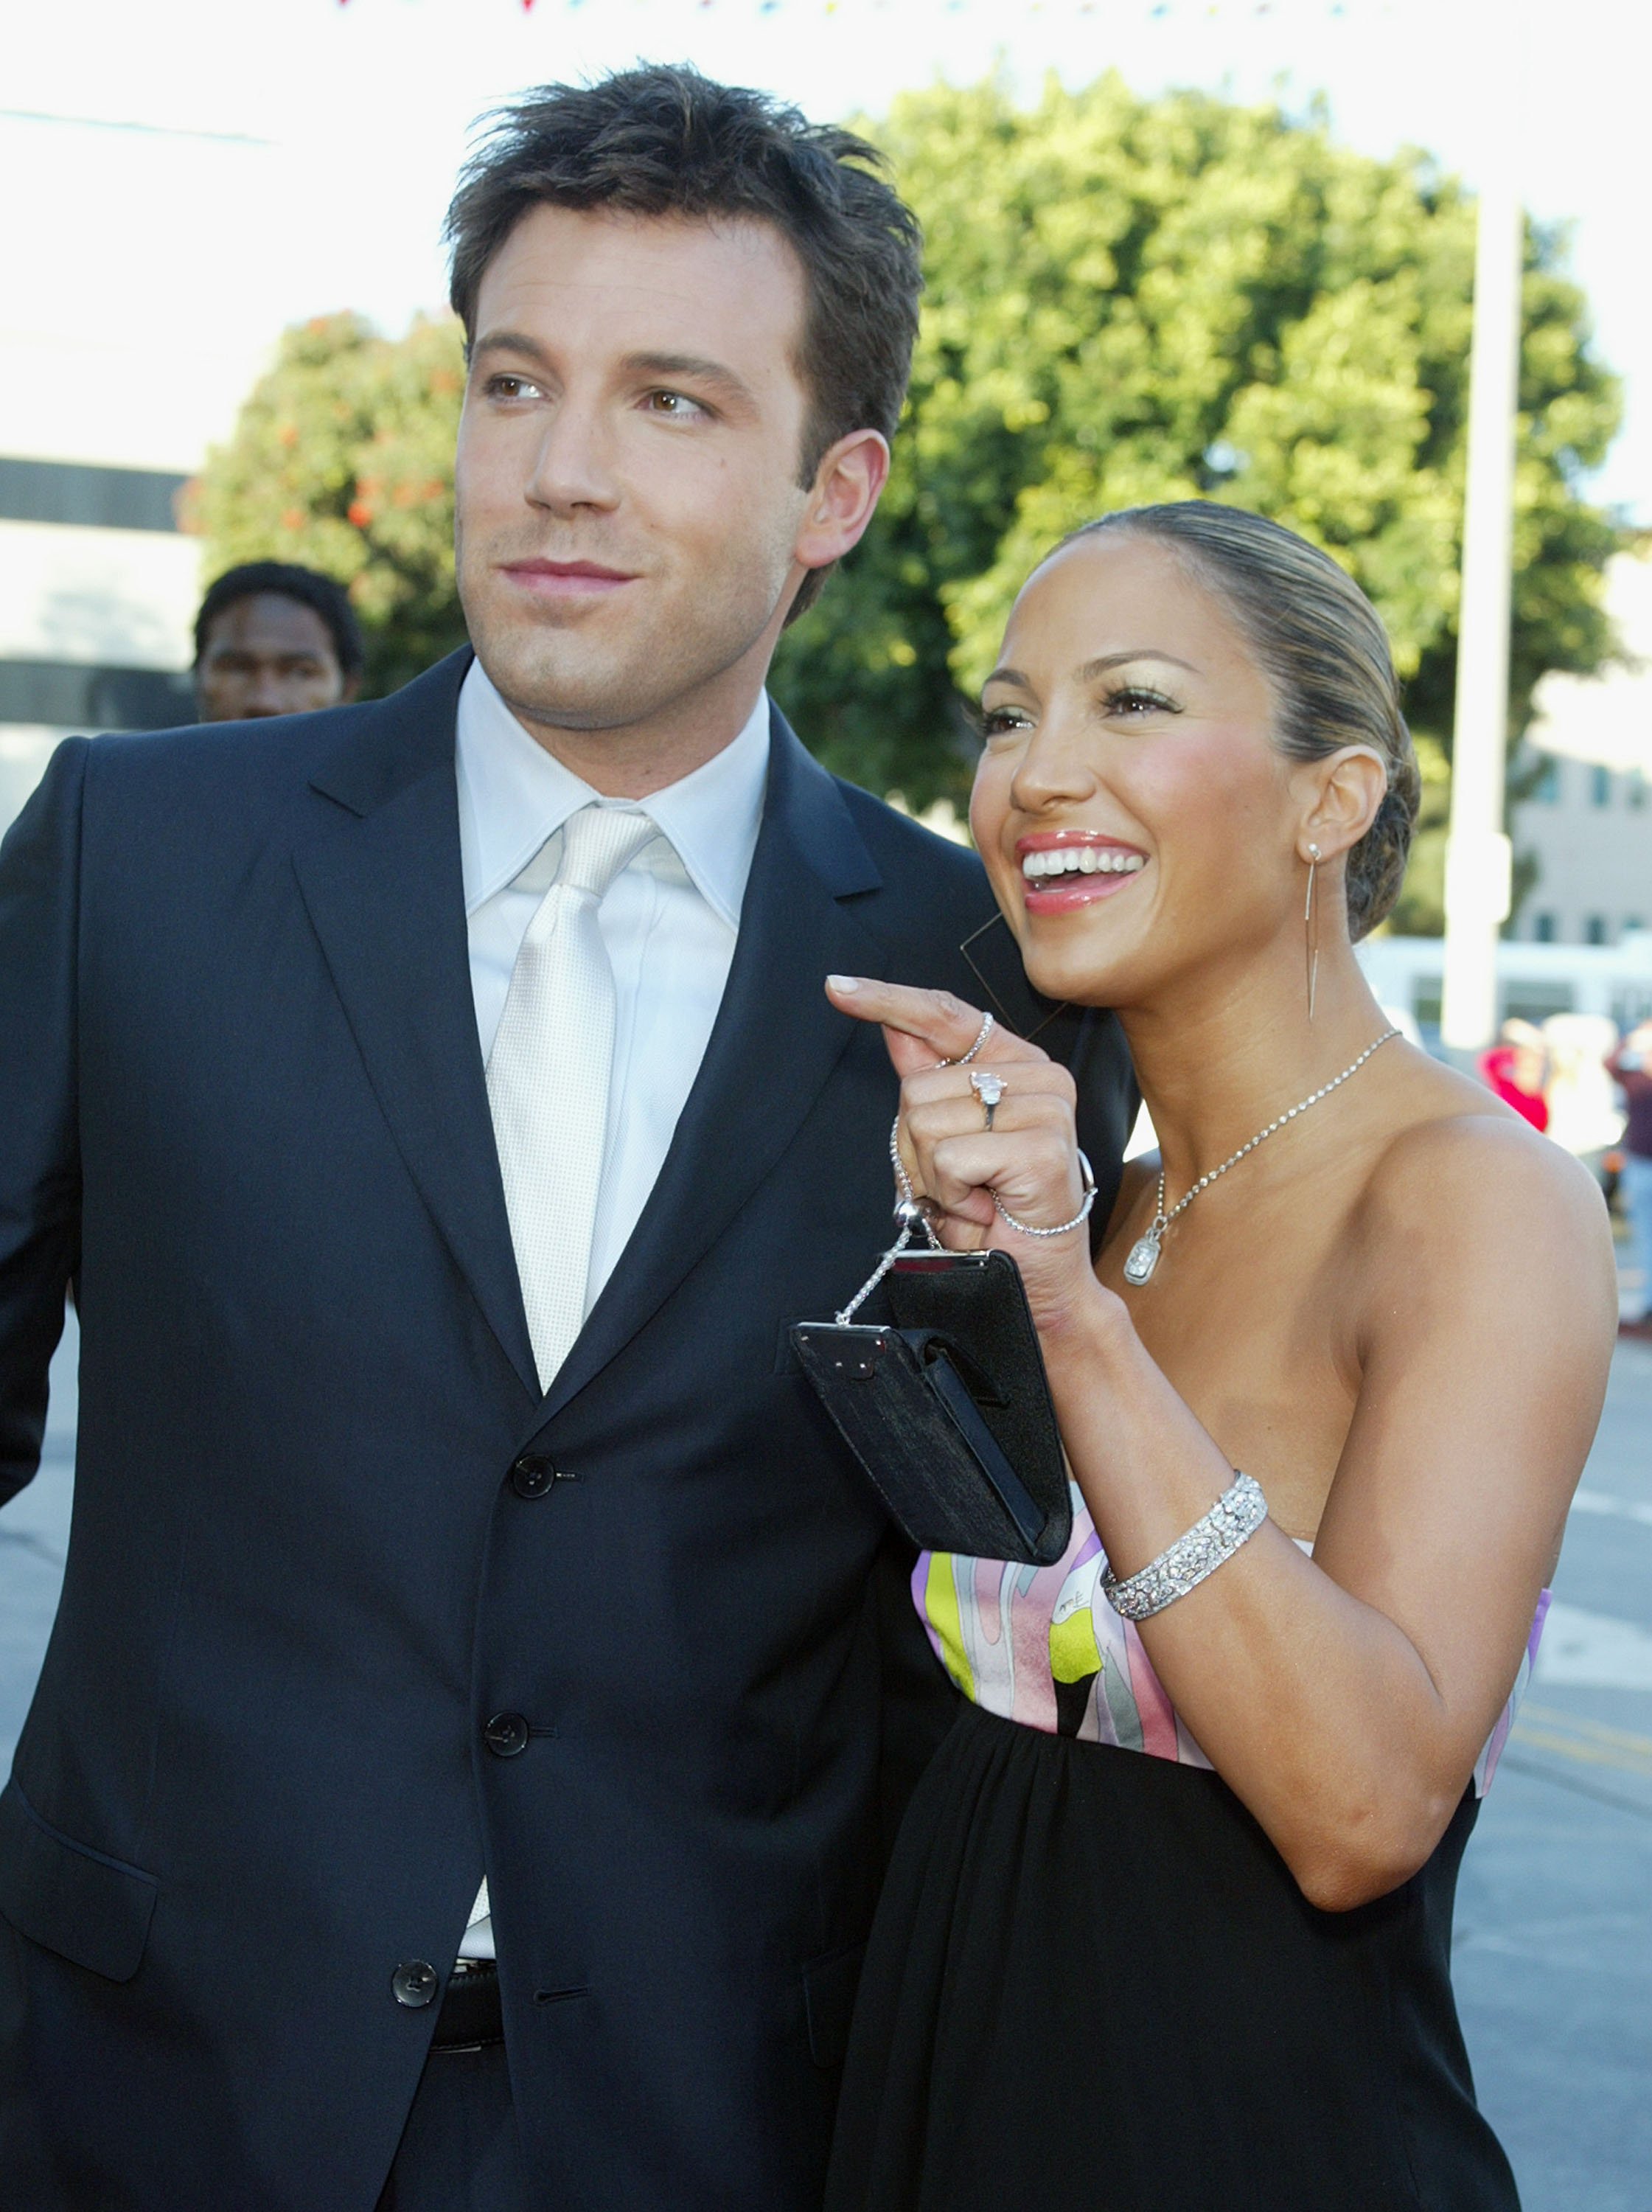 Ben Affleck and Jennifer Lopez in LA 2003. |  Source: Getty Images